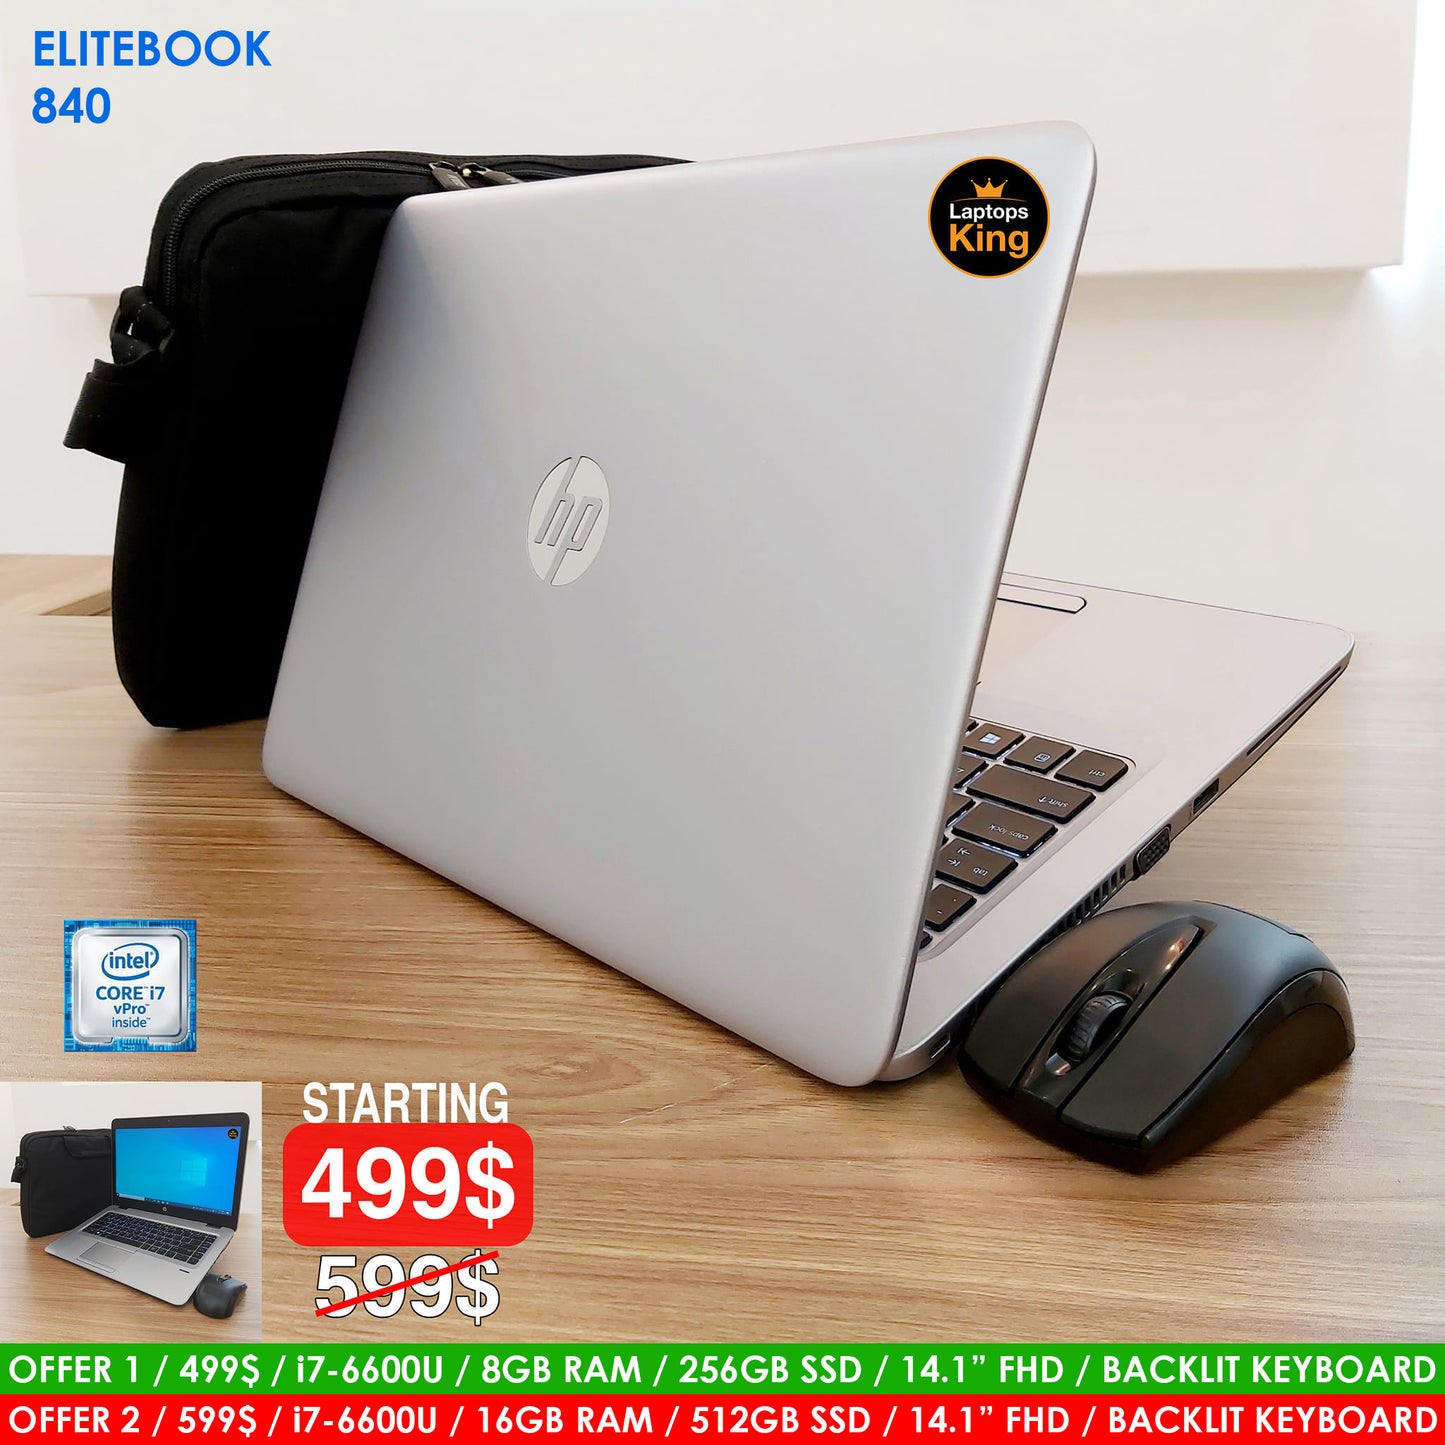 HP EliteBook 840 i7 Laptop (Open Box)